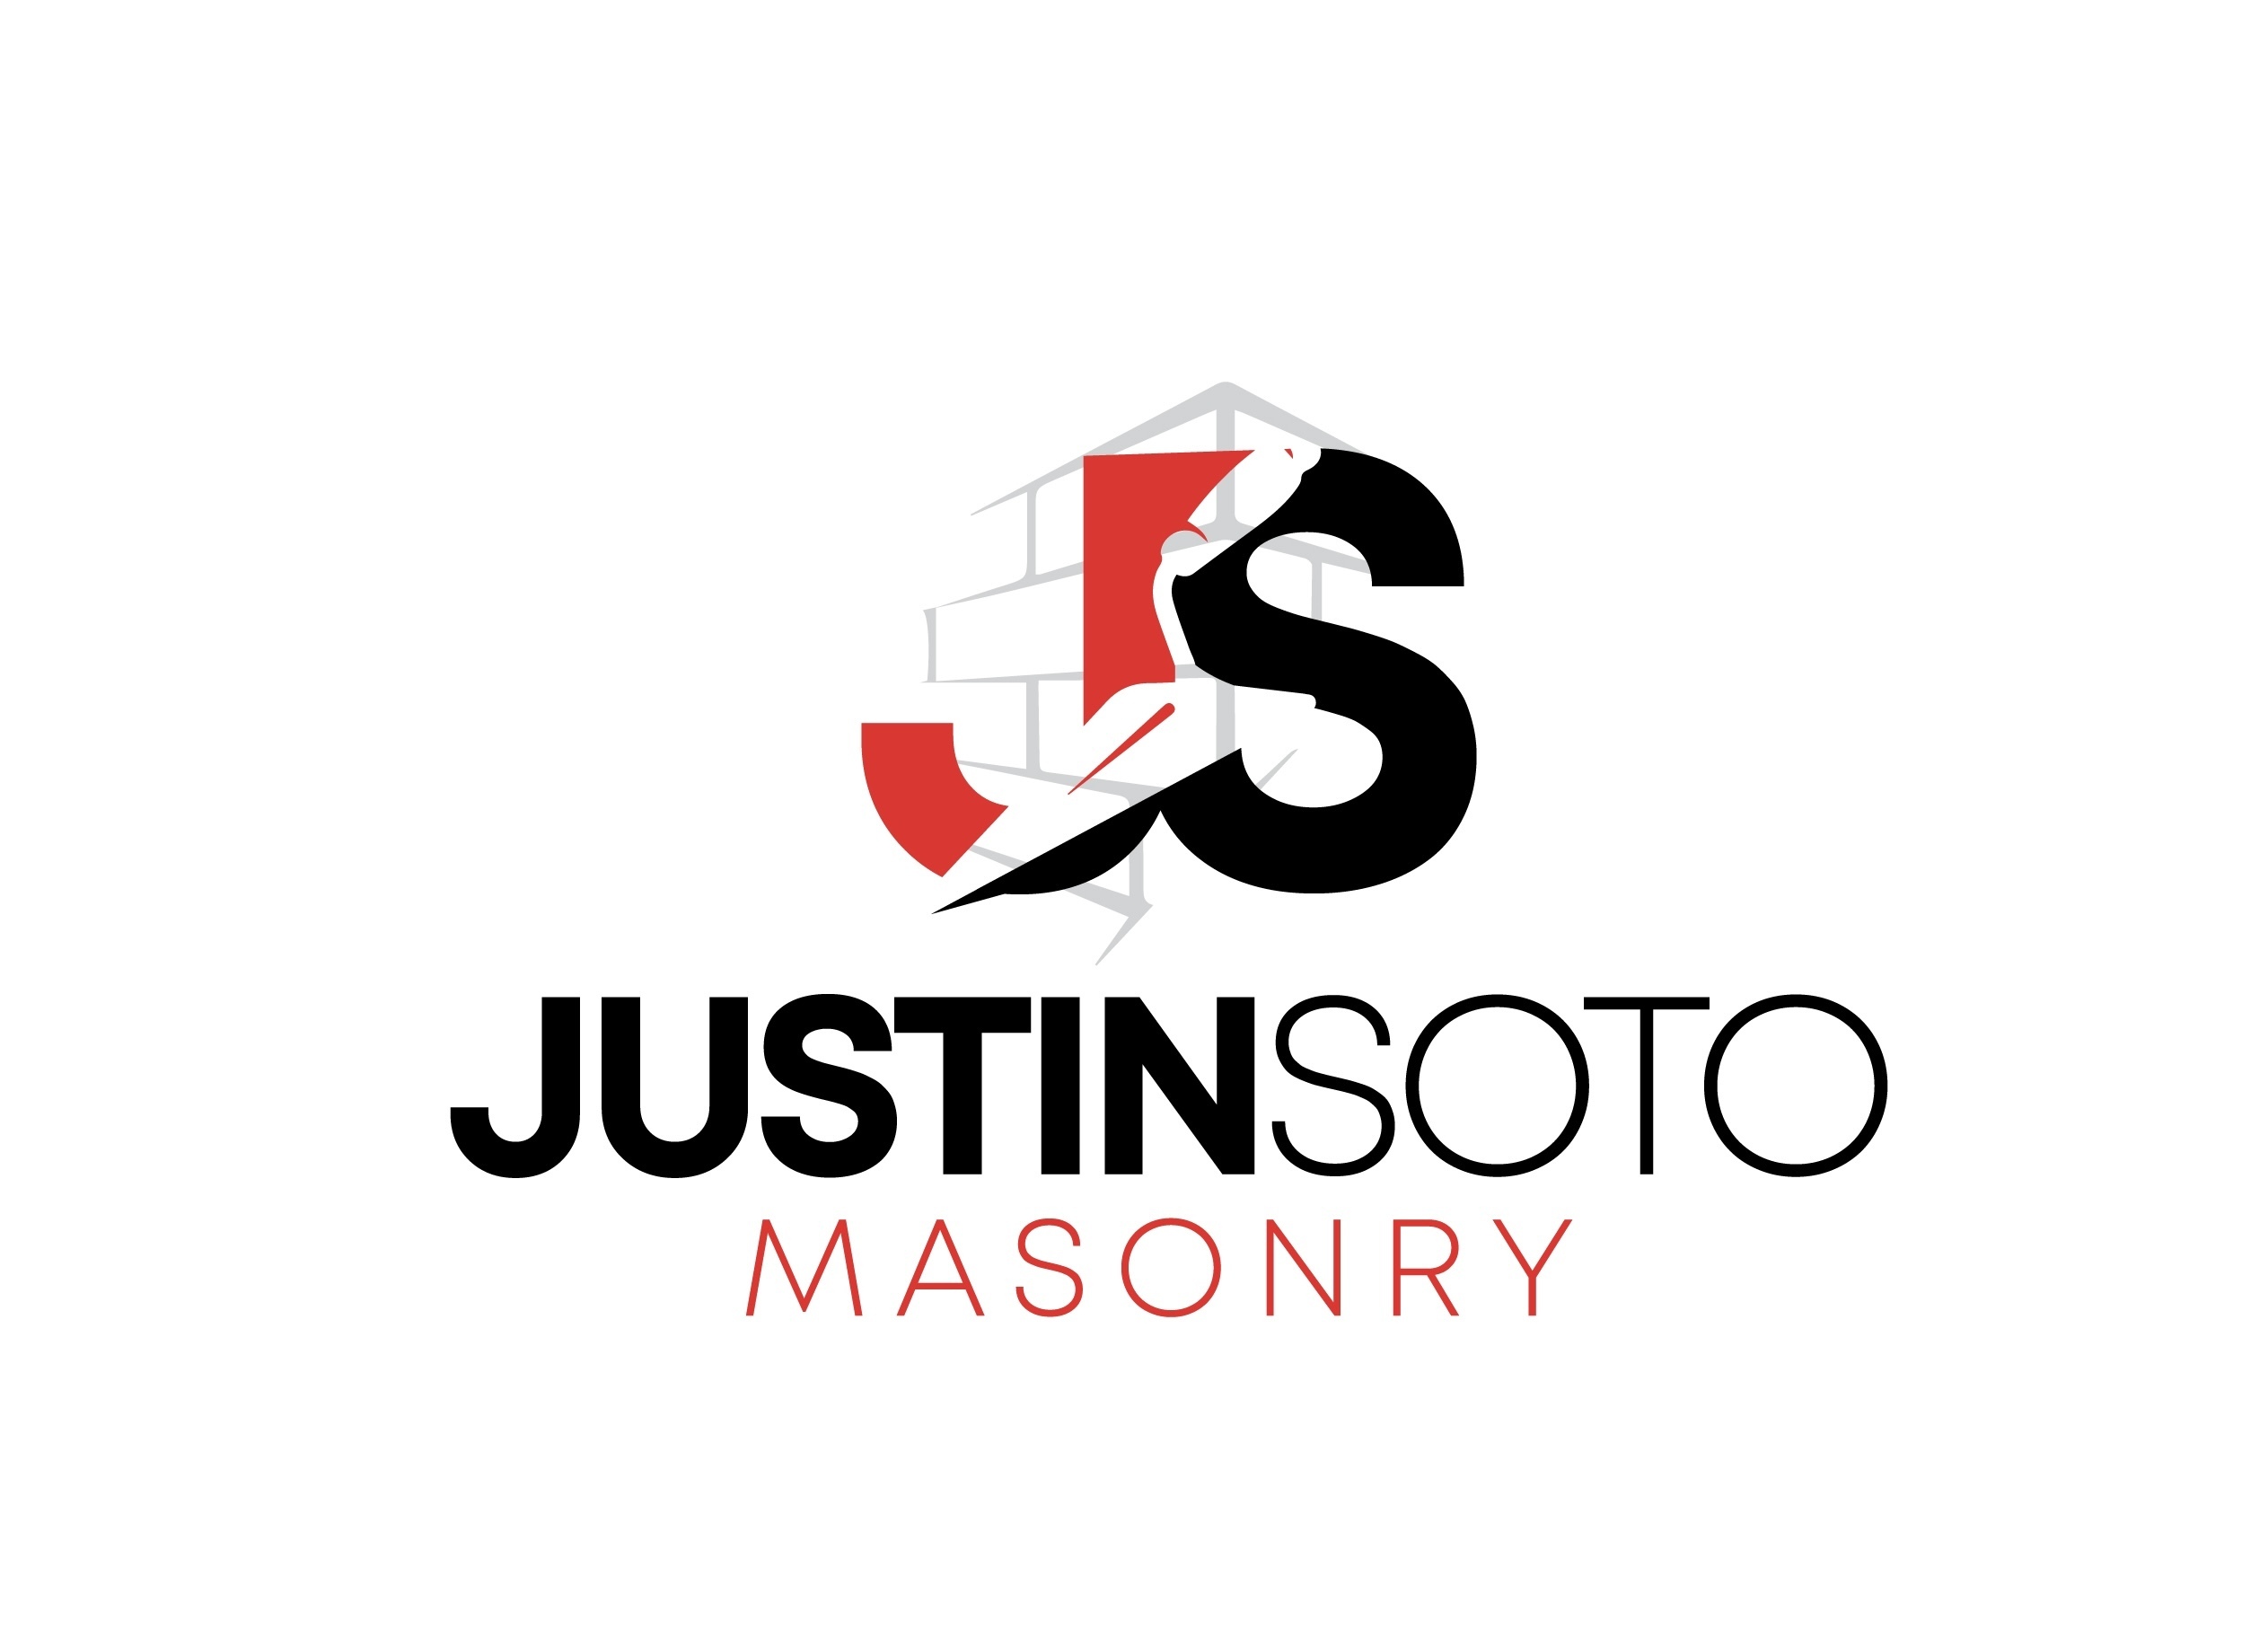 Justin Soto Masonry